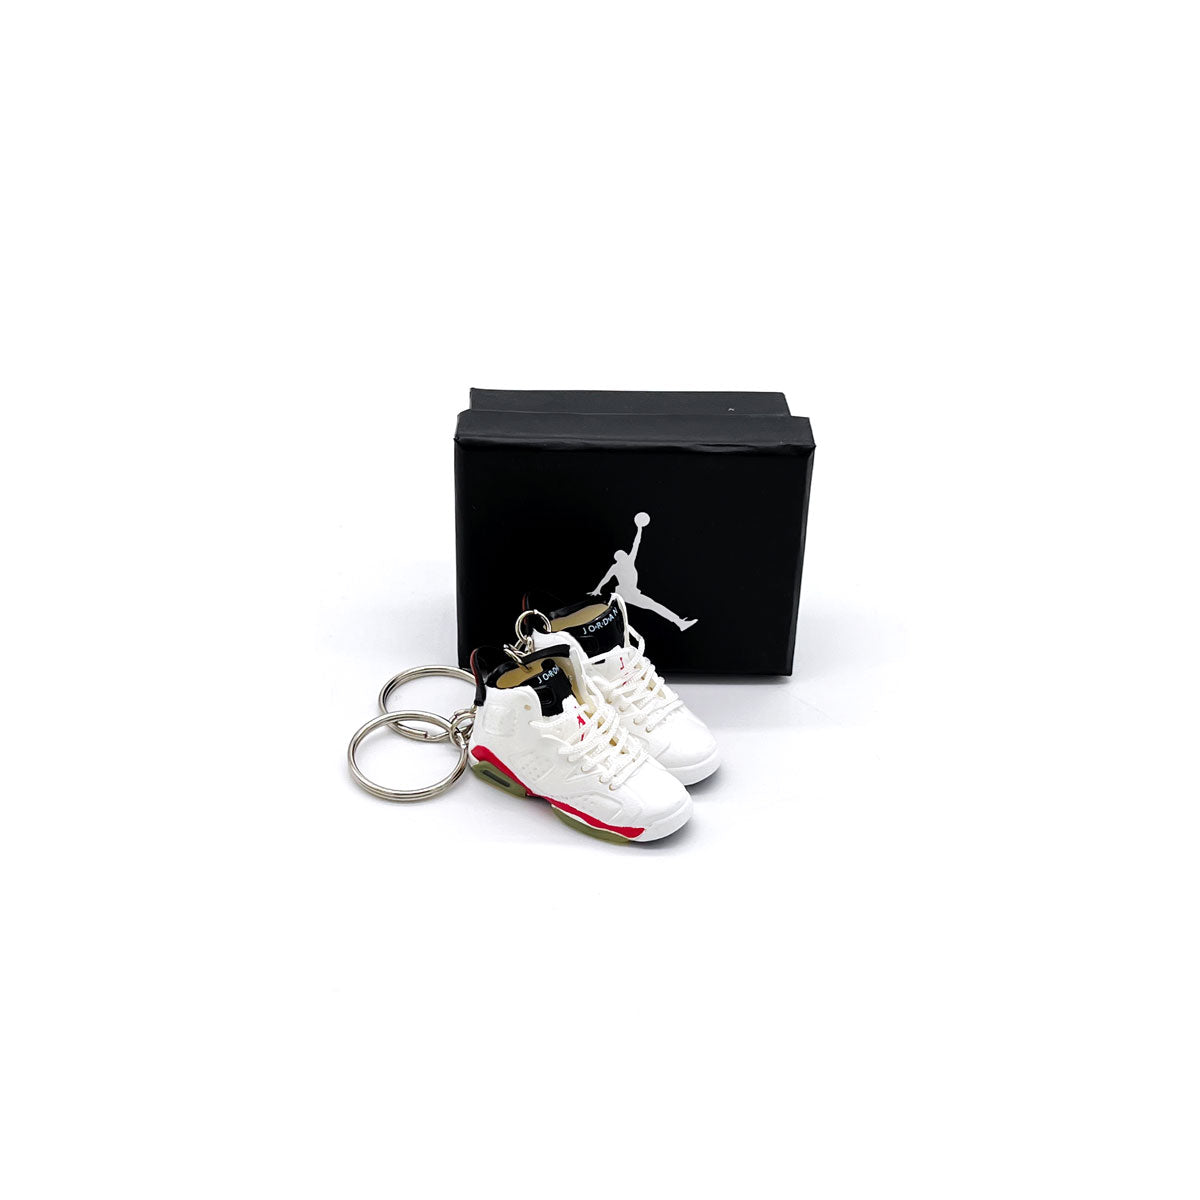 3D Sneaker Keychain- Air Jordan 6 White Infared Pair - KickzStore